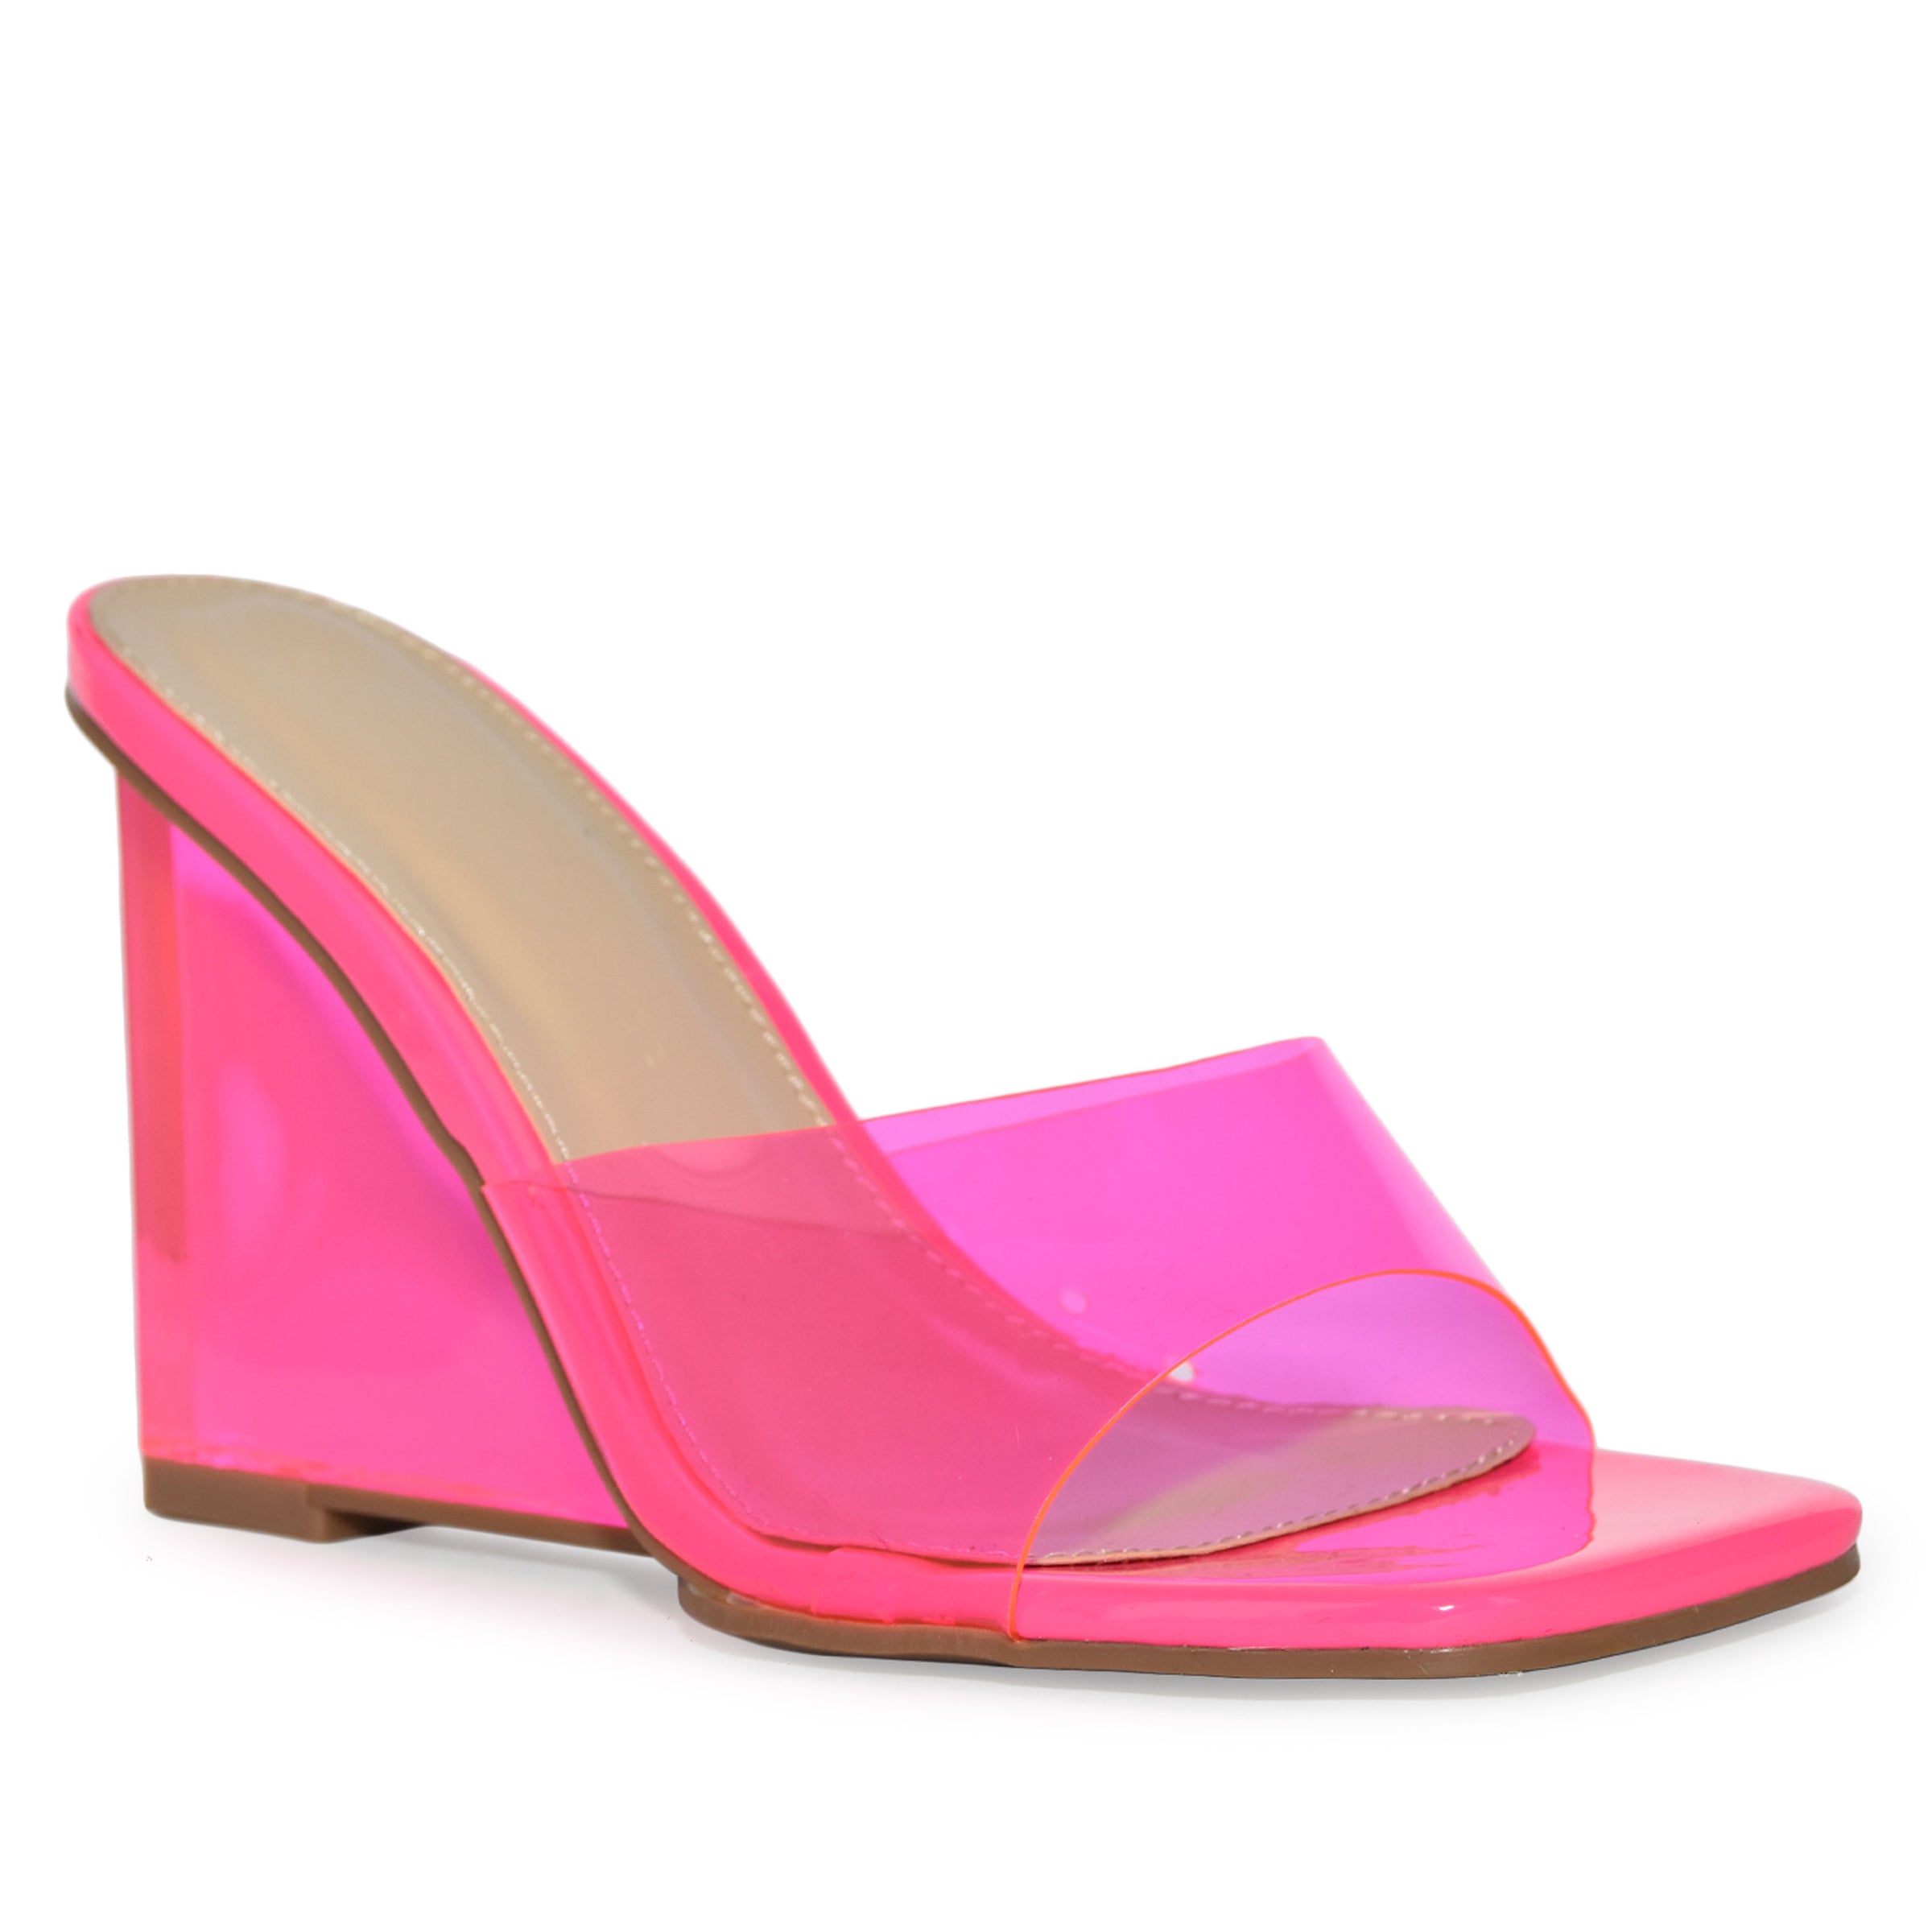 Jeanne Pink Wedges  Pink wedges, Wedges, Designer heels